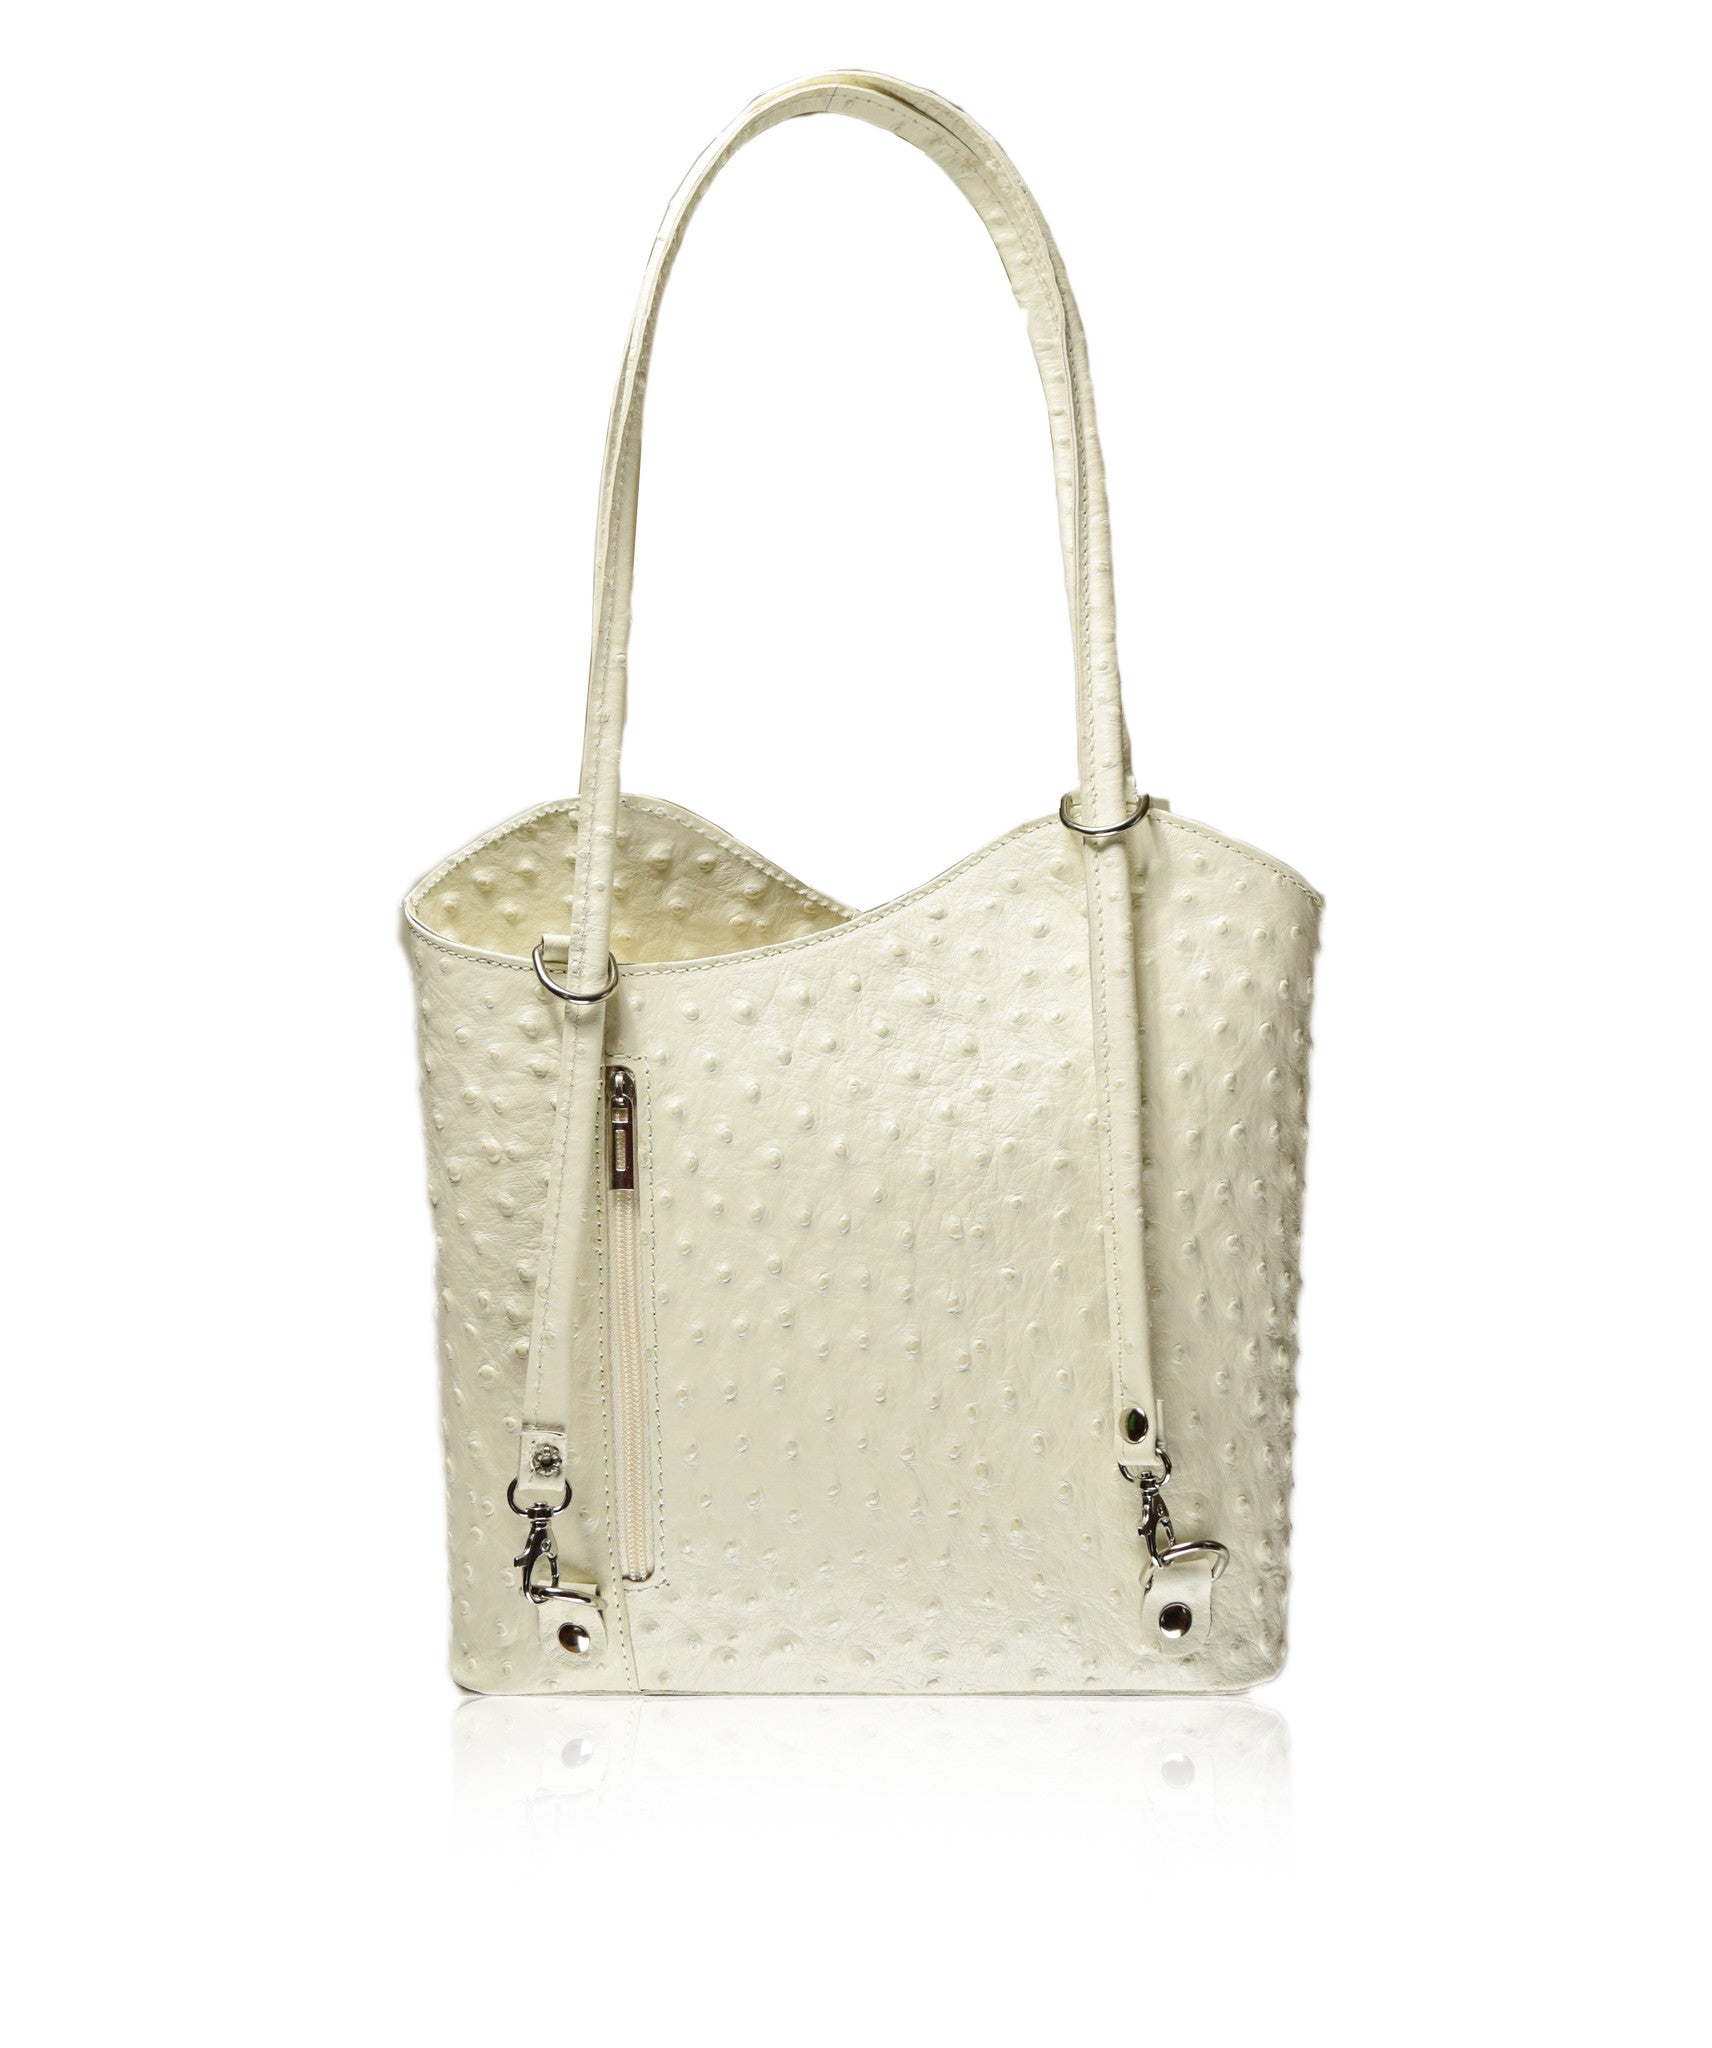 VENTURINA | Off White Colour Italian Leather Handbag | Florence Leather Collection